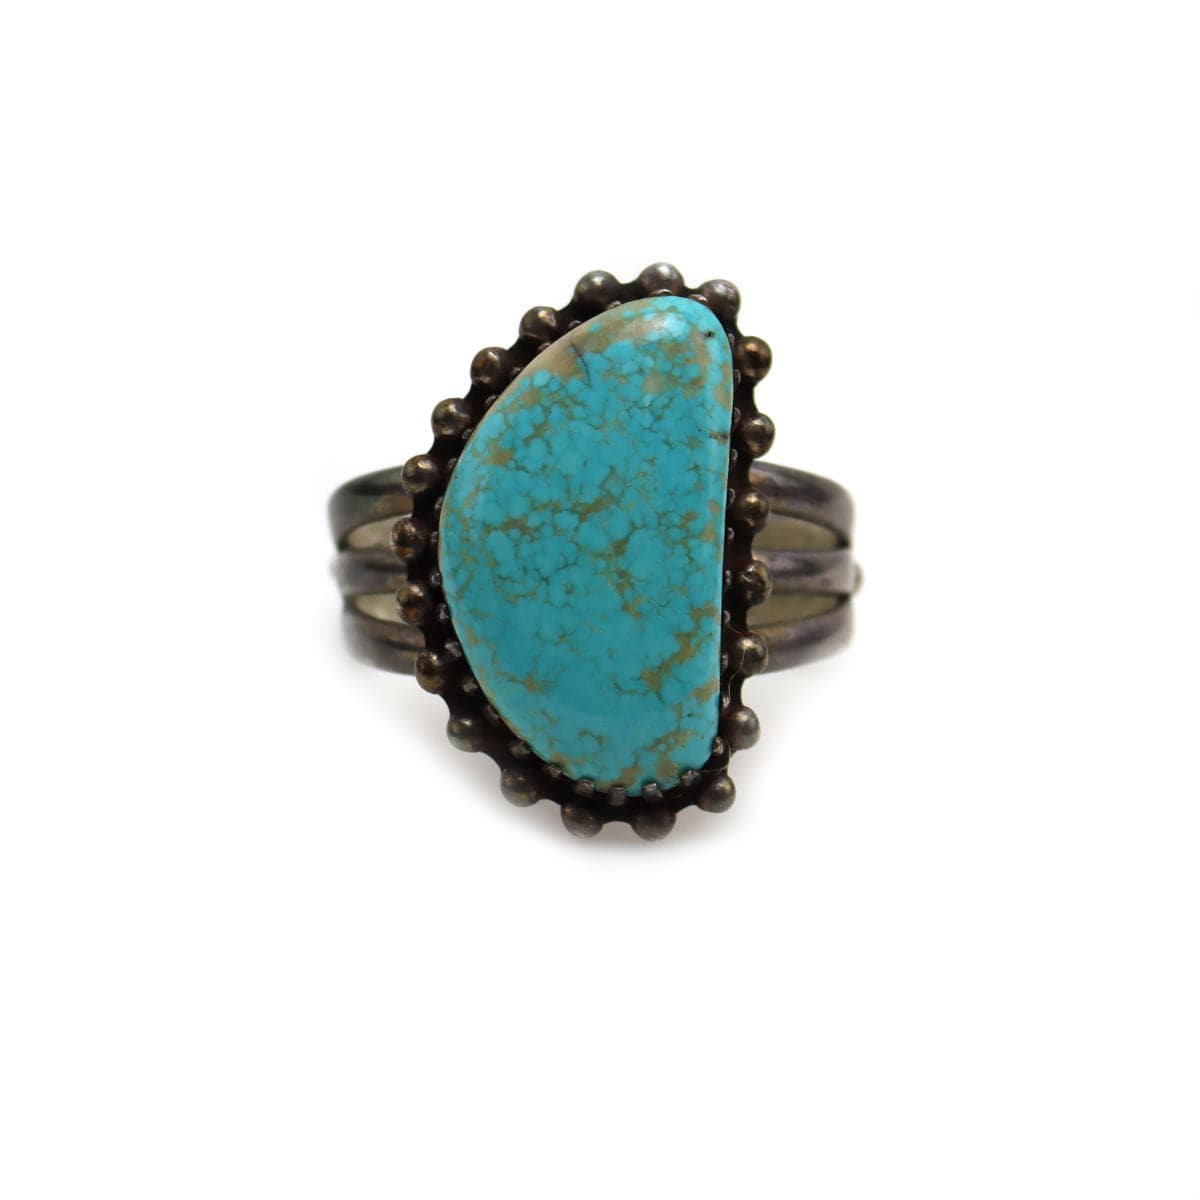 Deborah Silversmith (b. 1957) - Navajo Turquoise and Silver Bracelet c. 1990s, size 5.75 (J13695-CO)